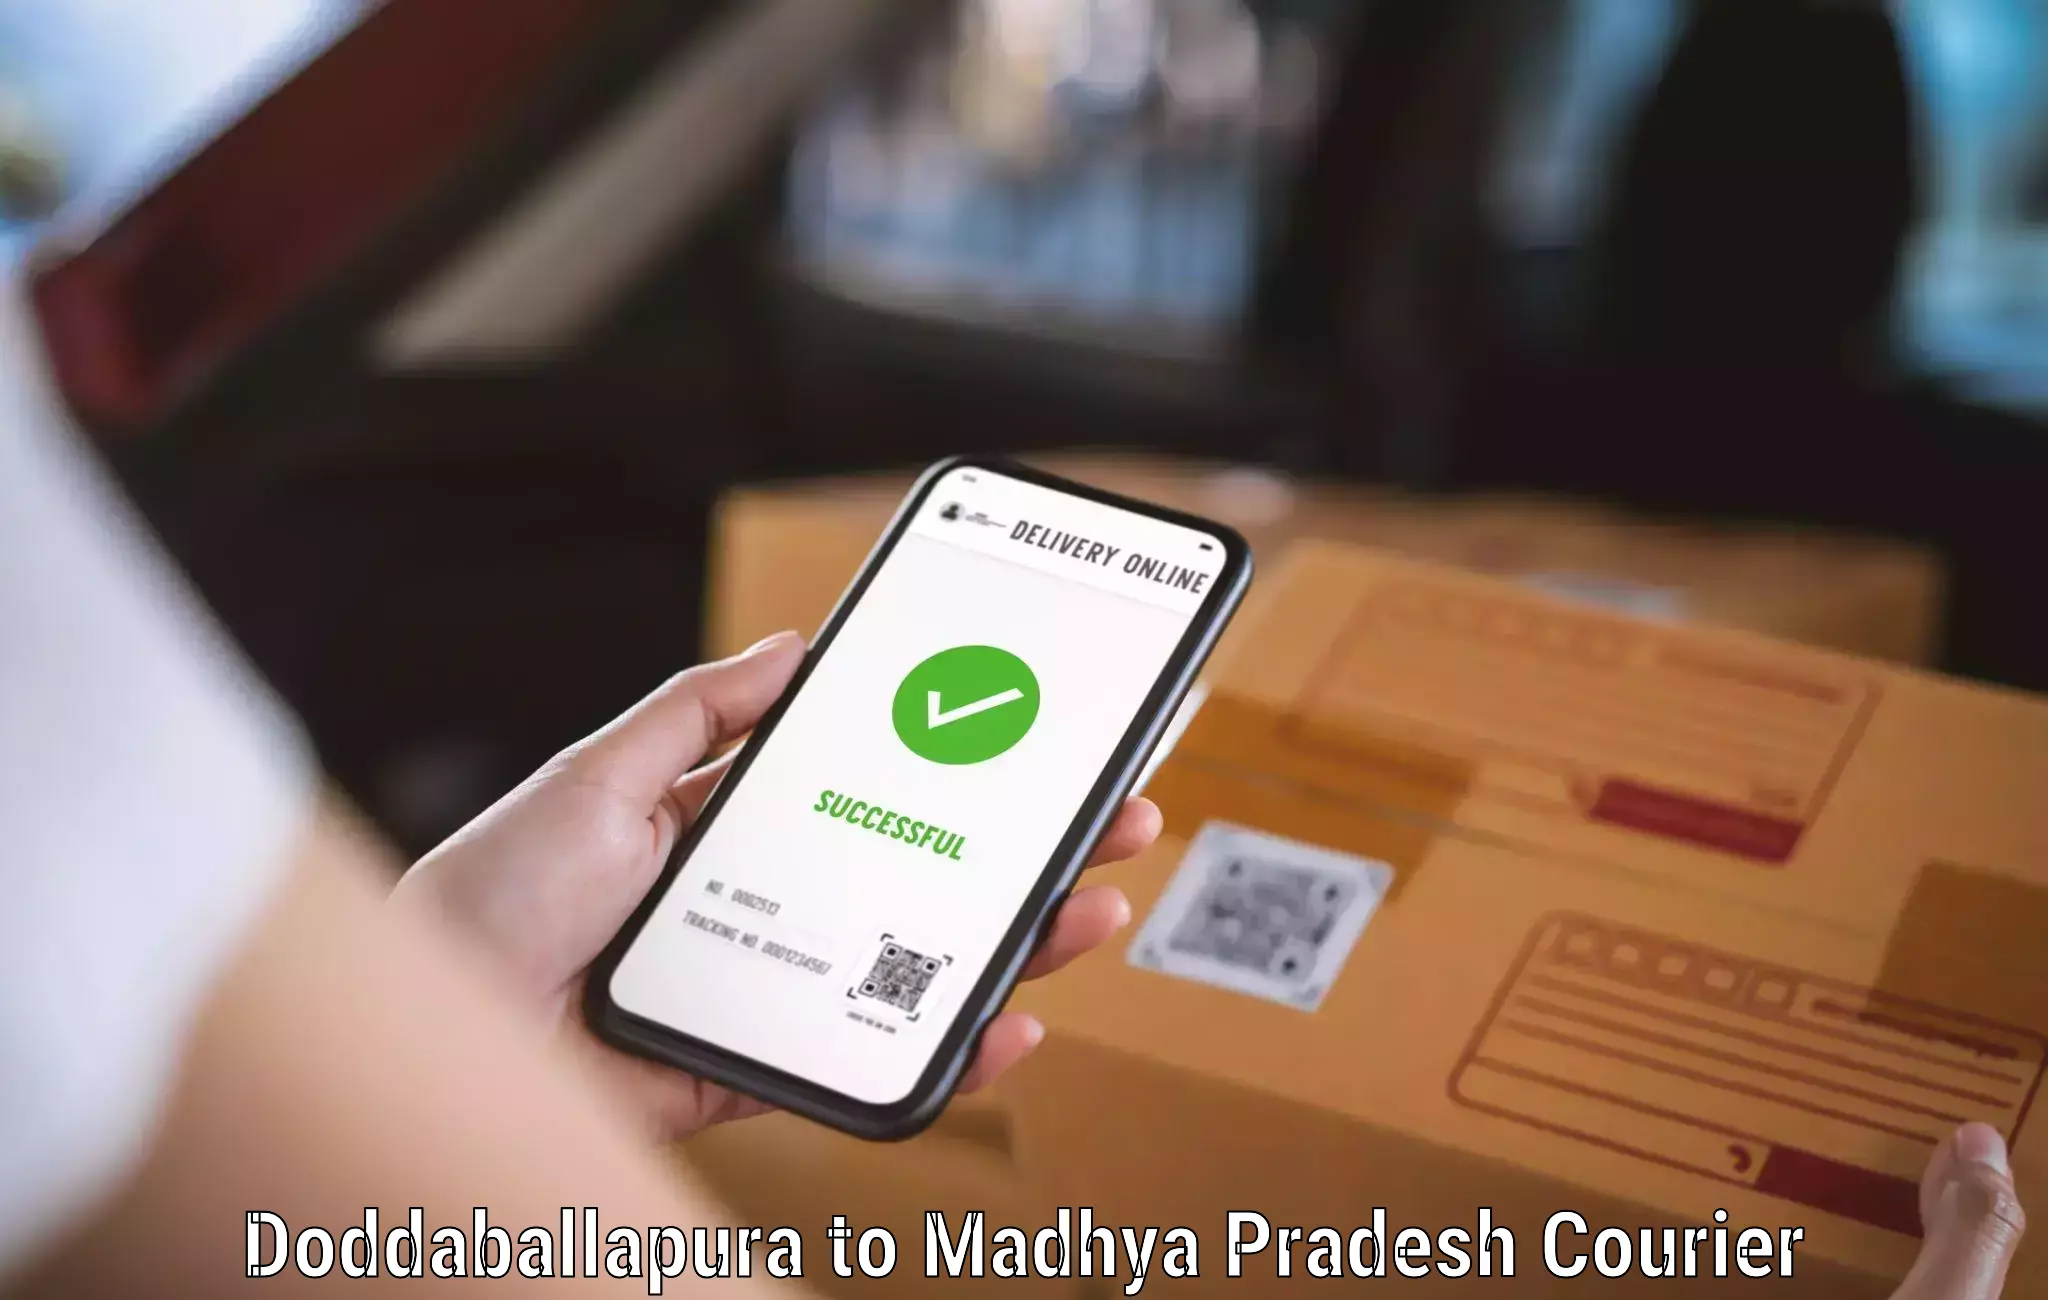 Reliable delivery network Doddaballapura to Bhanpura